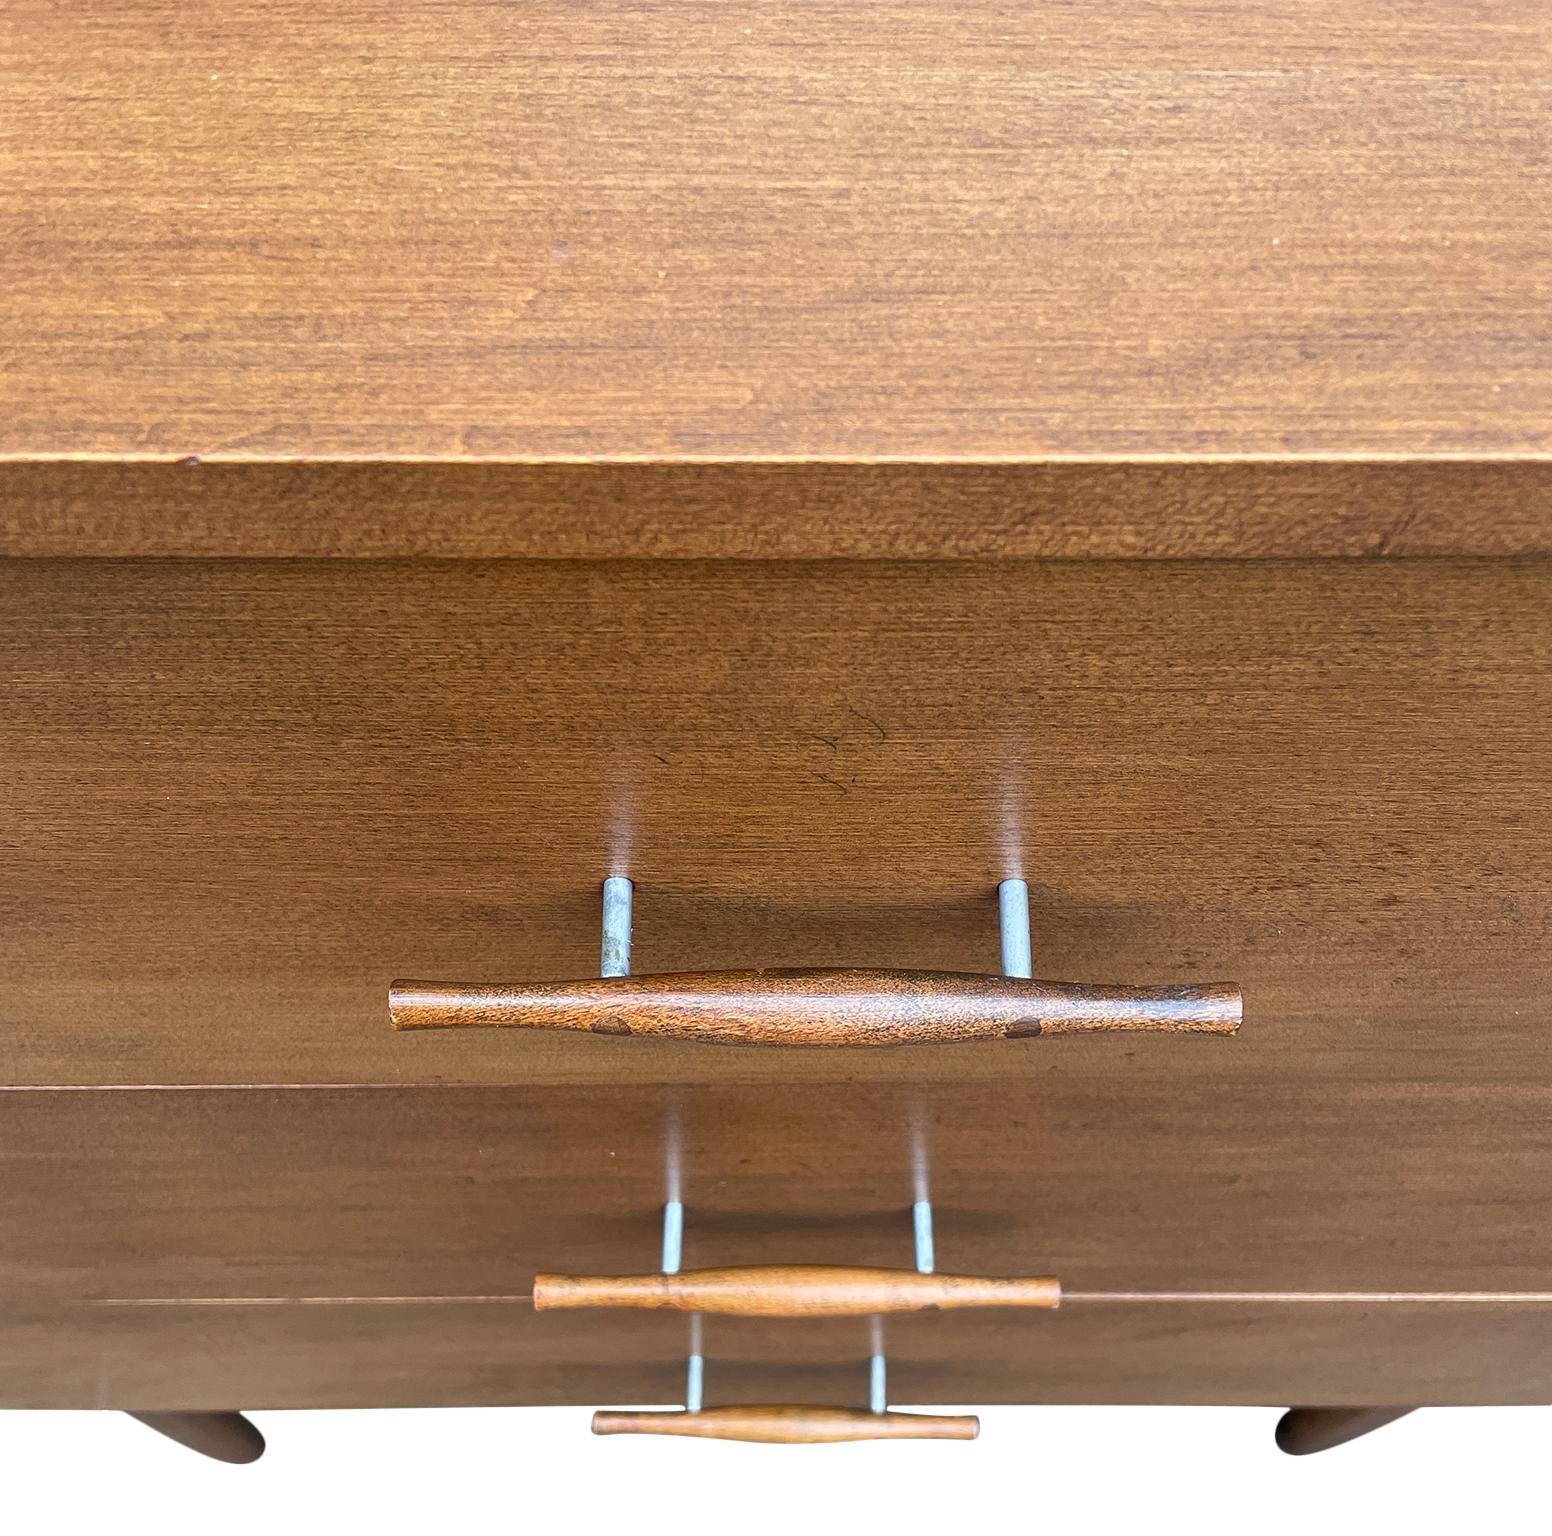 Woodwork Midcentury Modern Paul McCobb 3-Drawer Dresser #1508 Walnut Finish Pull Handles For Sale